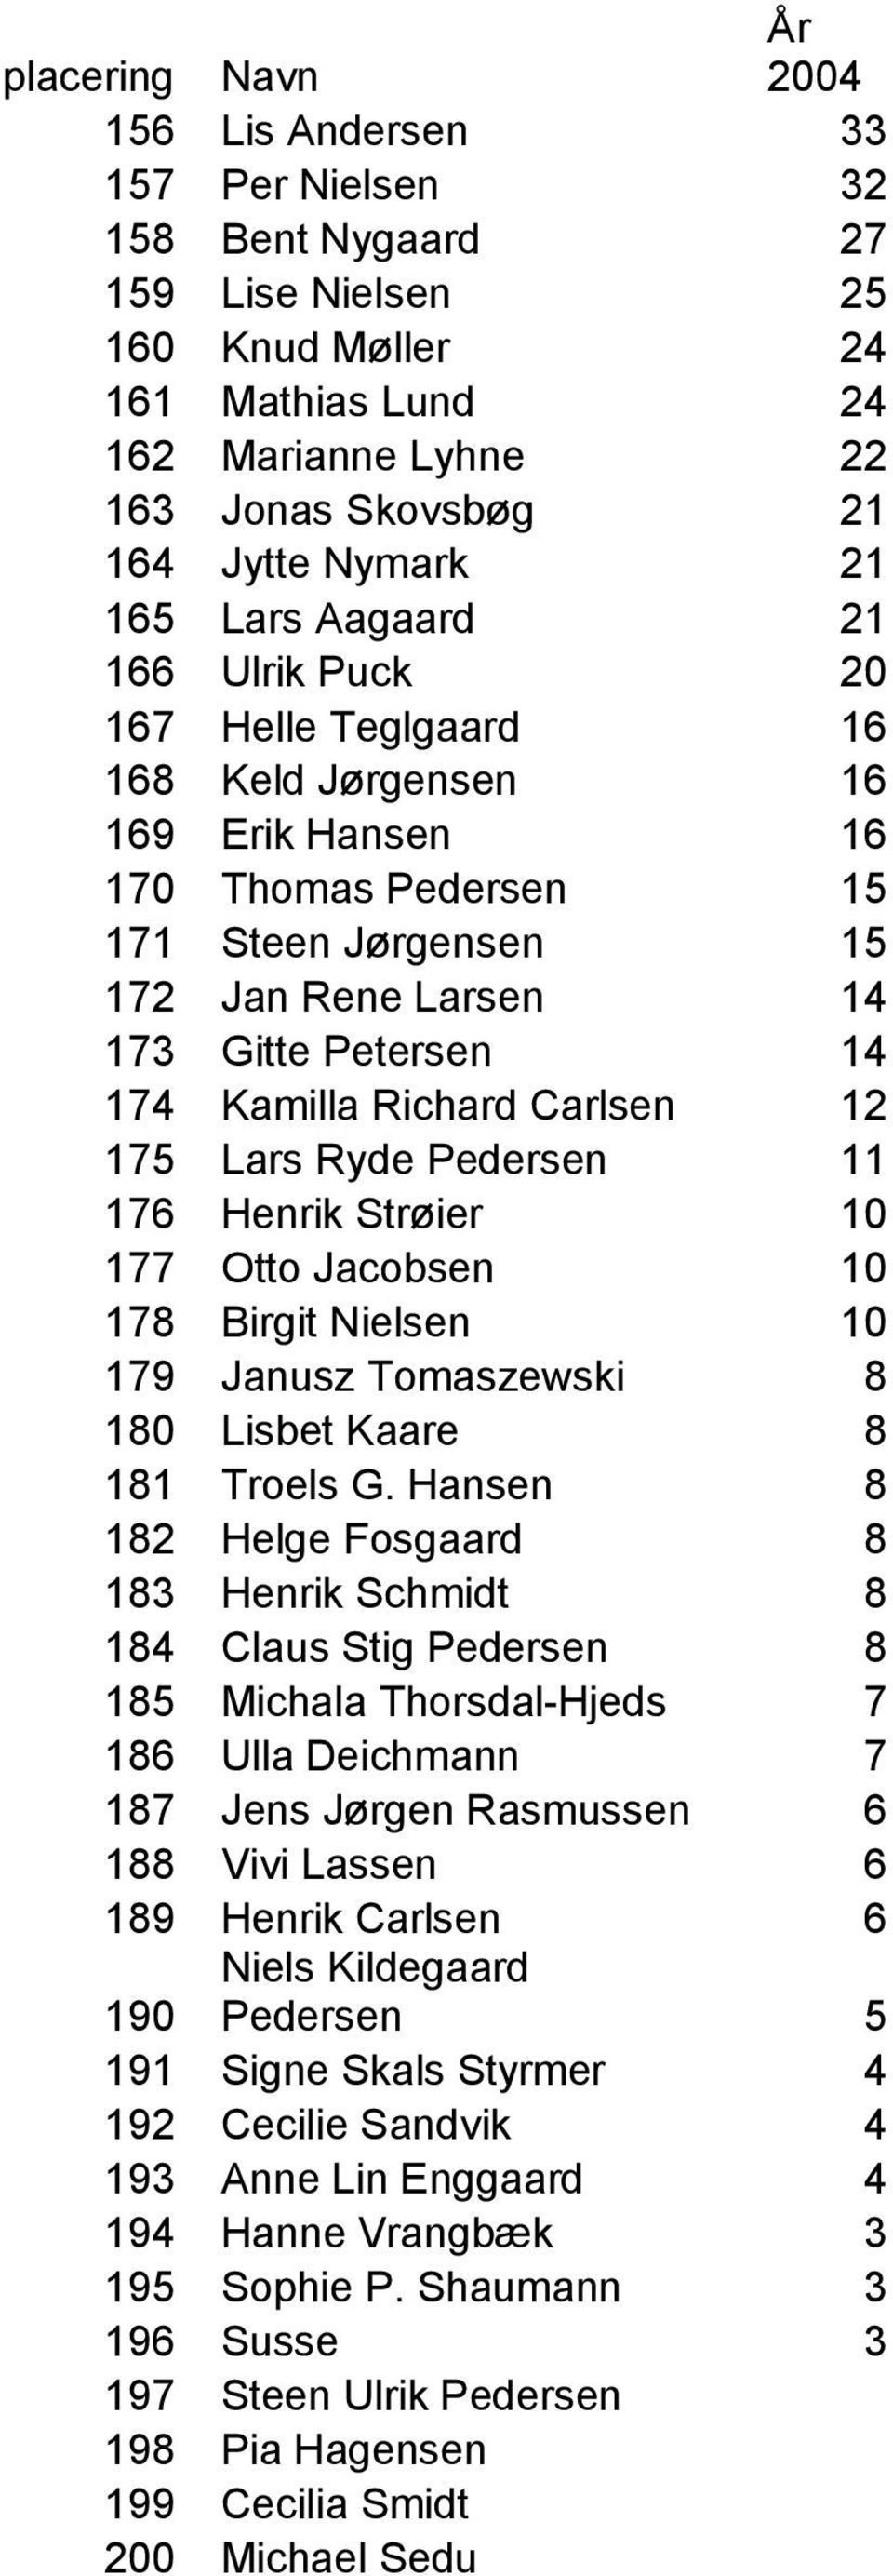 Carlsen 12 175 Lars Ryde Pedersen 11 176 Henrik Strøier 10 177 Otto Jacobsen 10 178 Birgit Nielsen 10 179 Janusz Tomaszewski 8 180 Lisbet Kaare 8 181 Troels G.